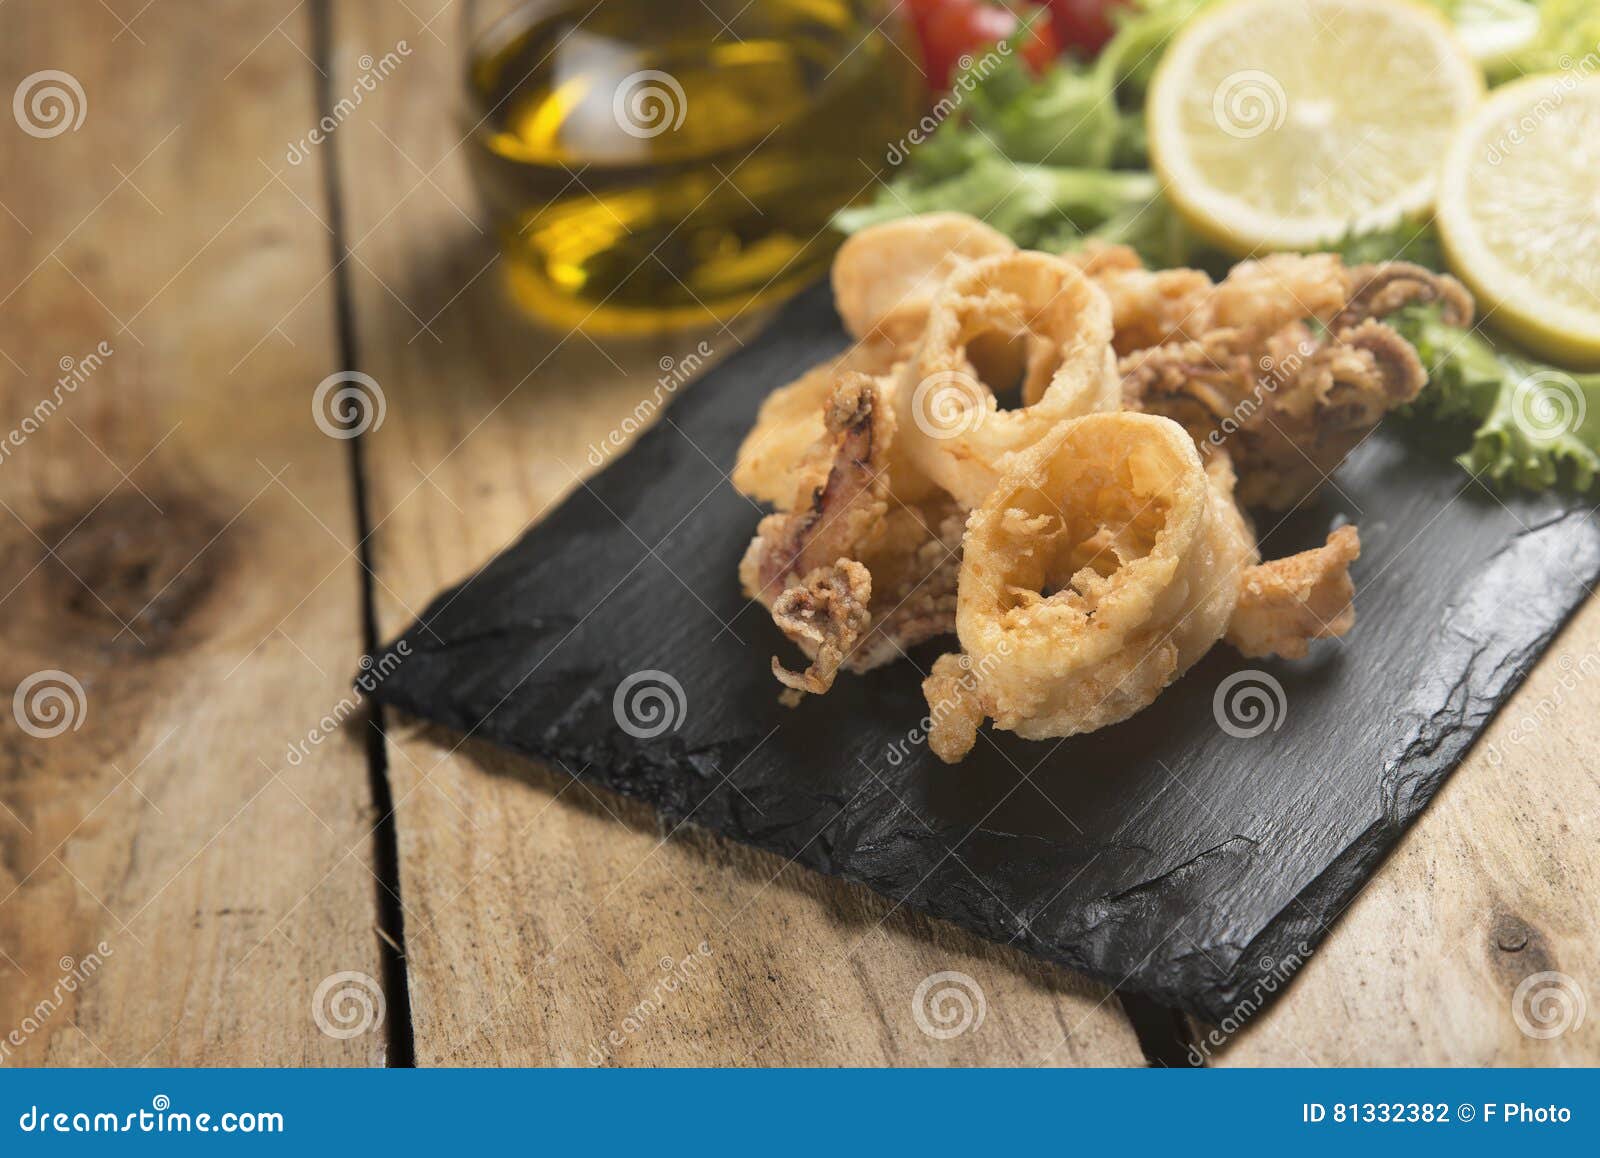 fried crispy calamari served on plate